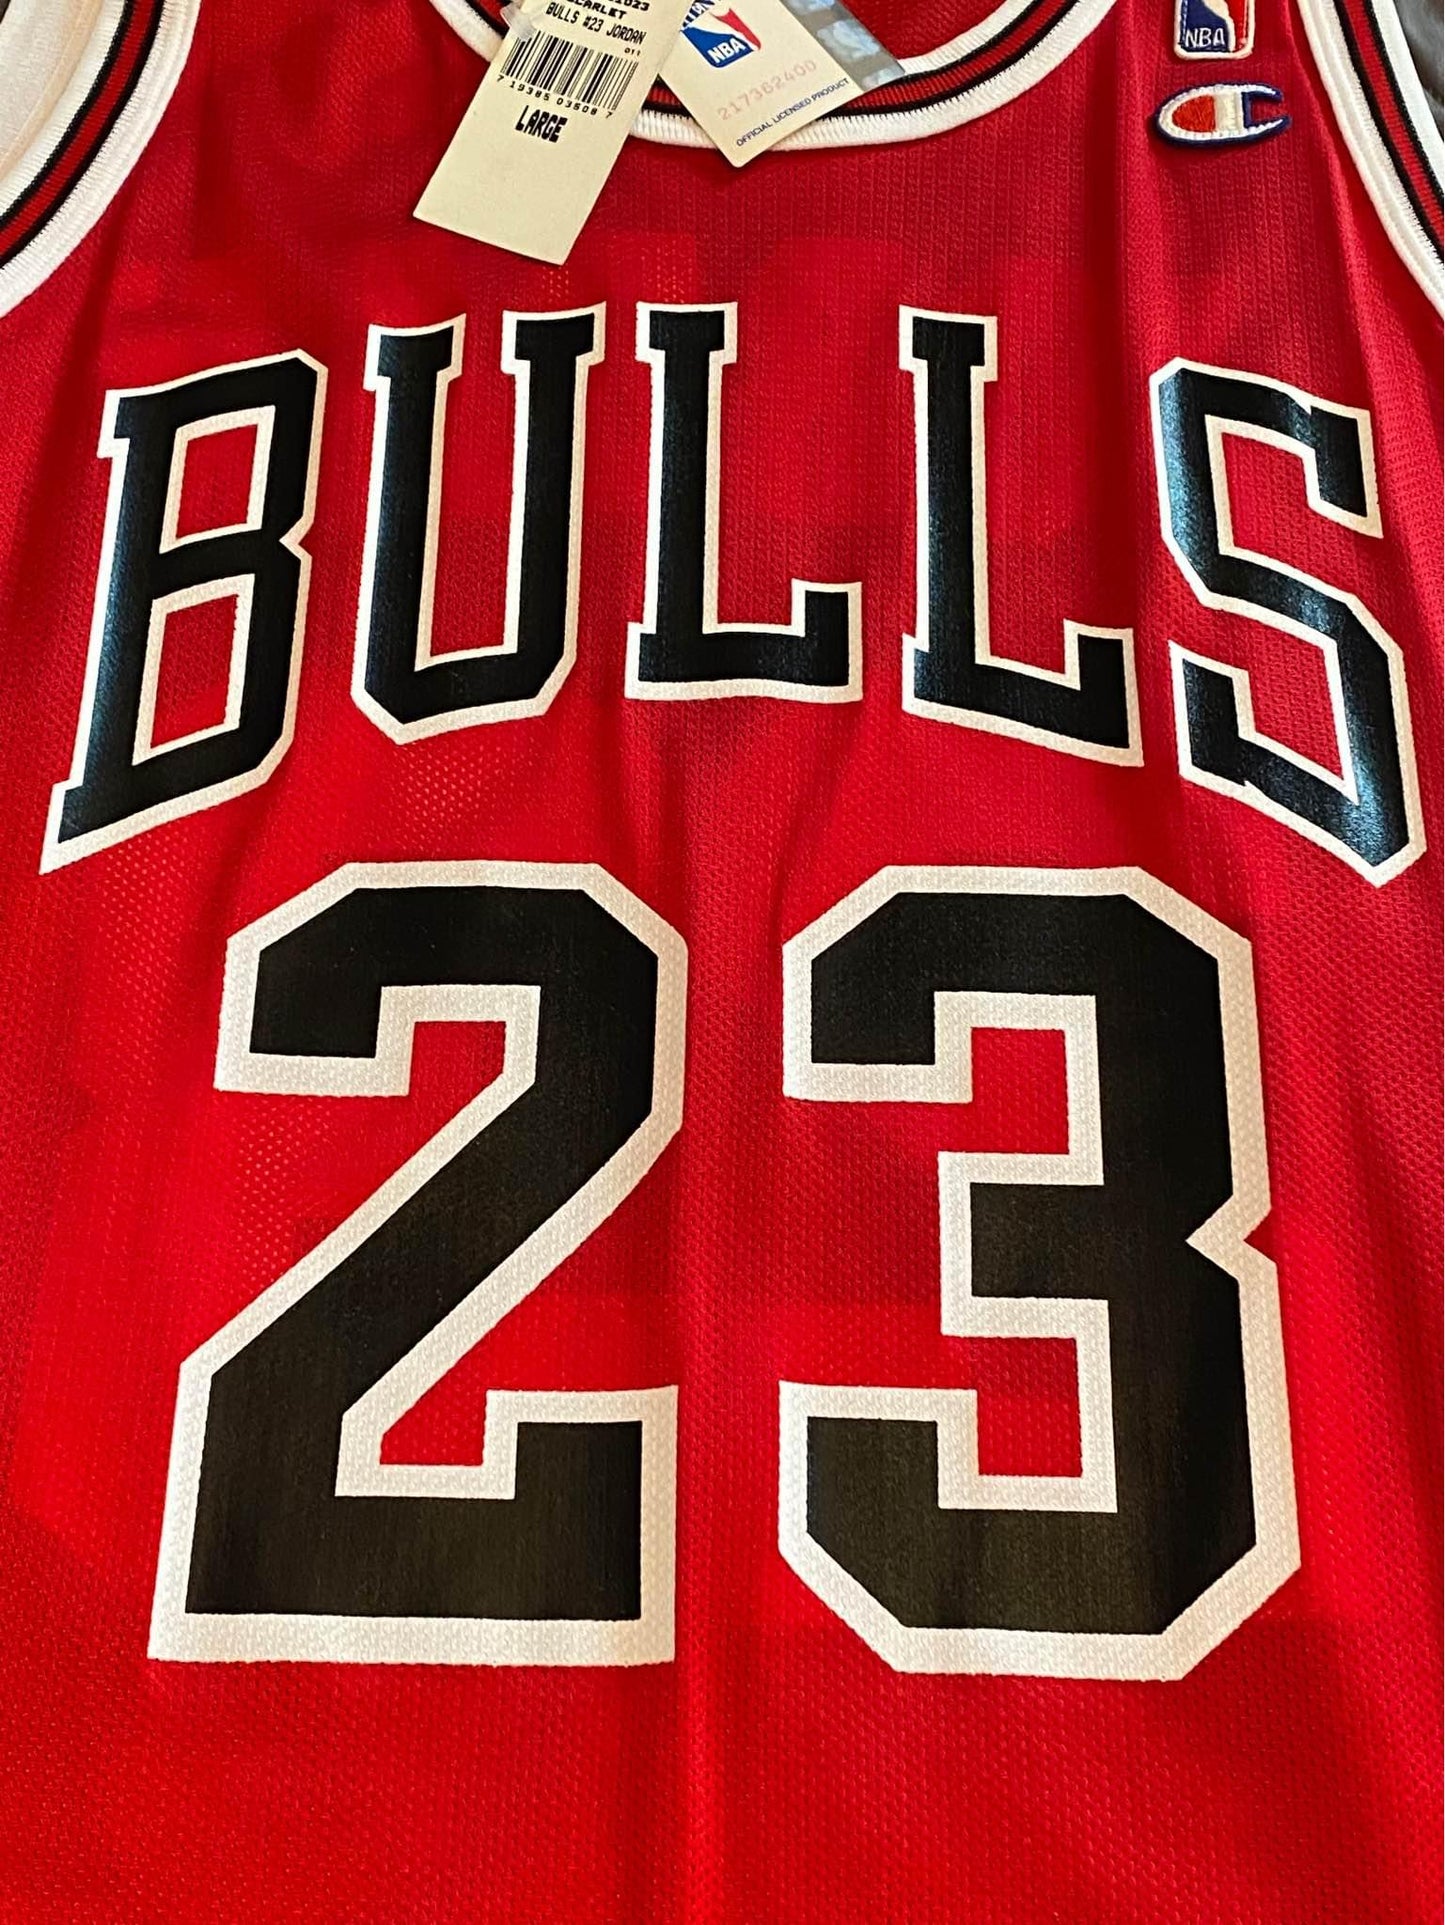 Vintage Champion Brand Chicago Bulls Michael Jordan Jersey Size